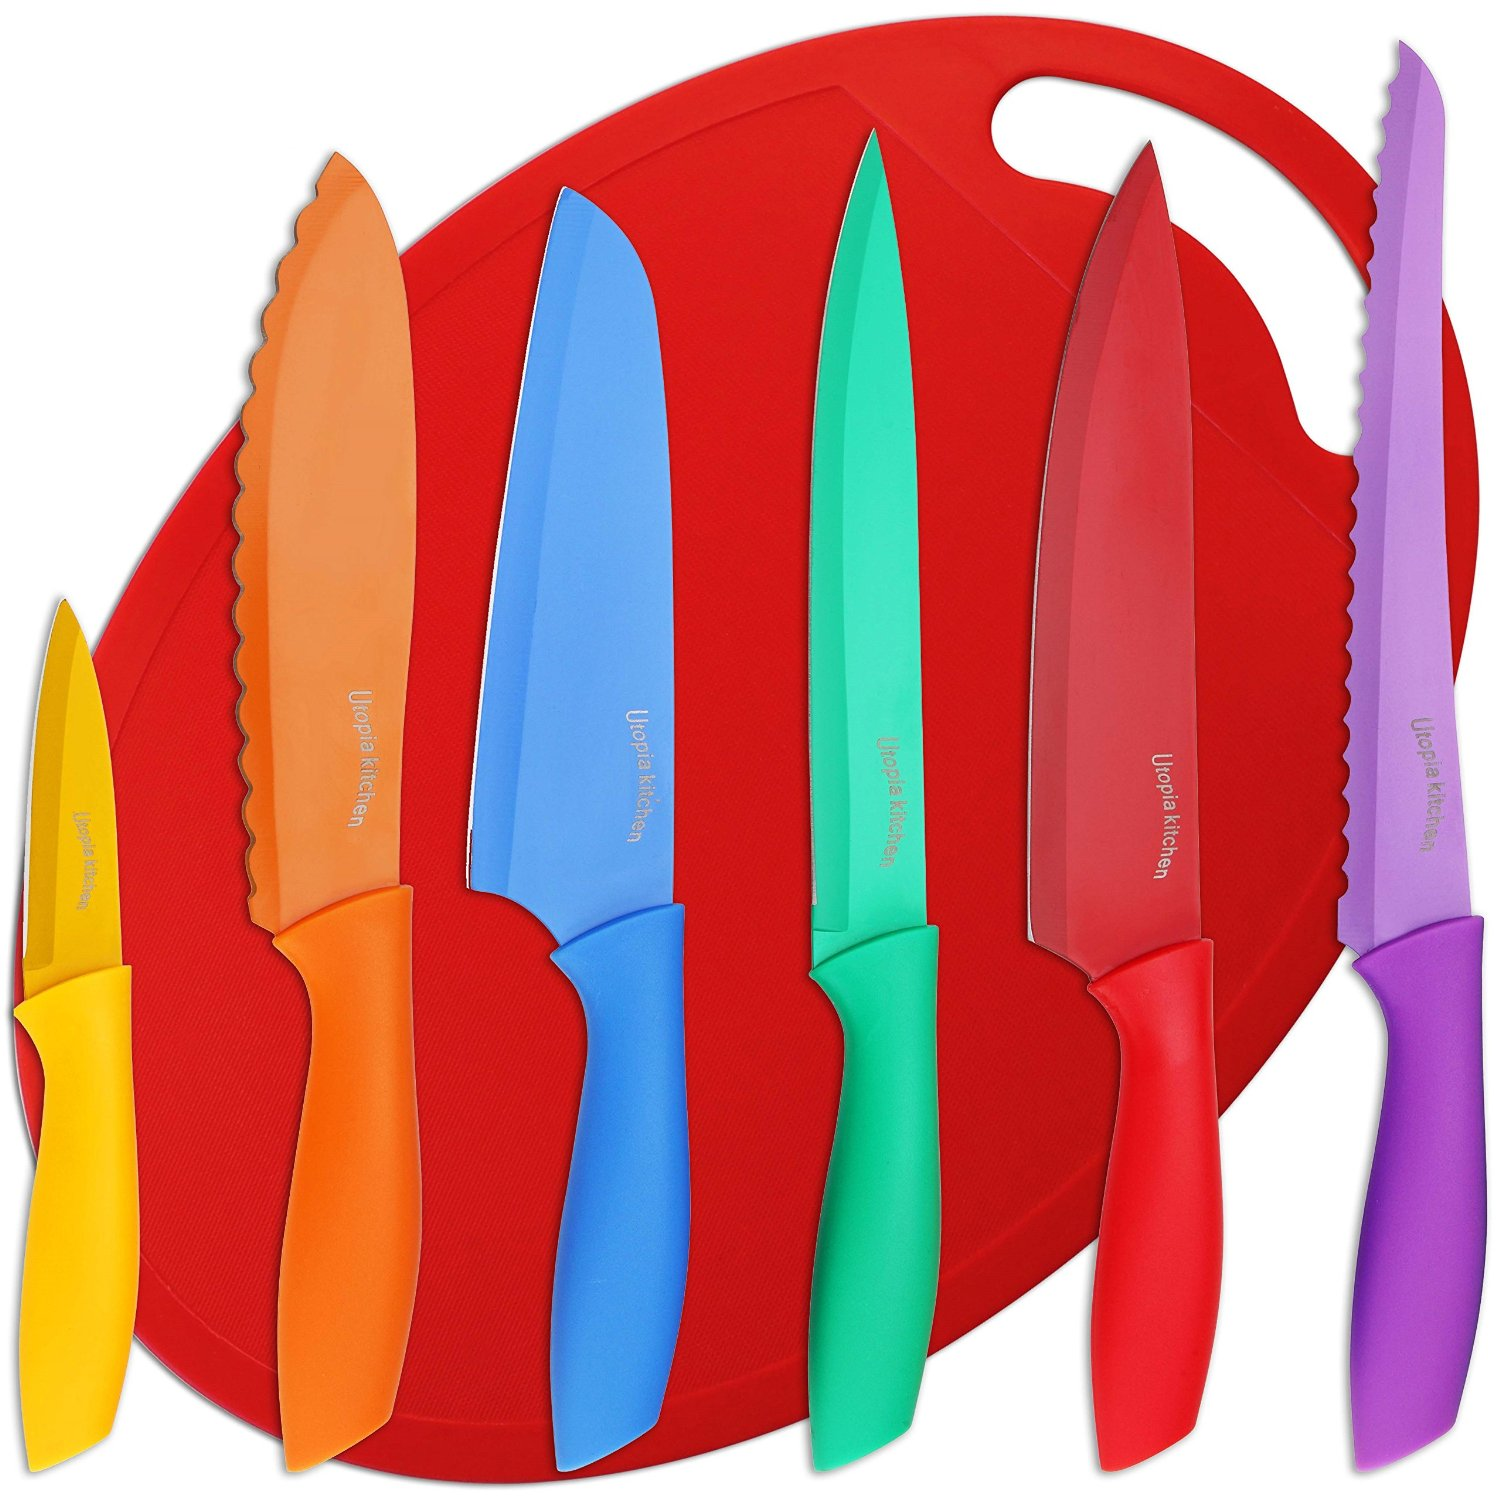 Amazon: Non-stick Knife Set Color Coded Plus Bonus Cutting Board for Just $11.99! (Reg $29.99)